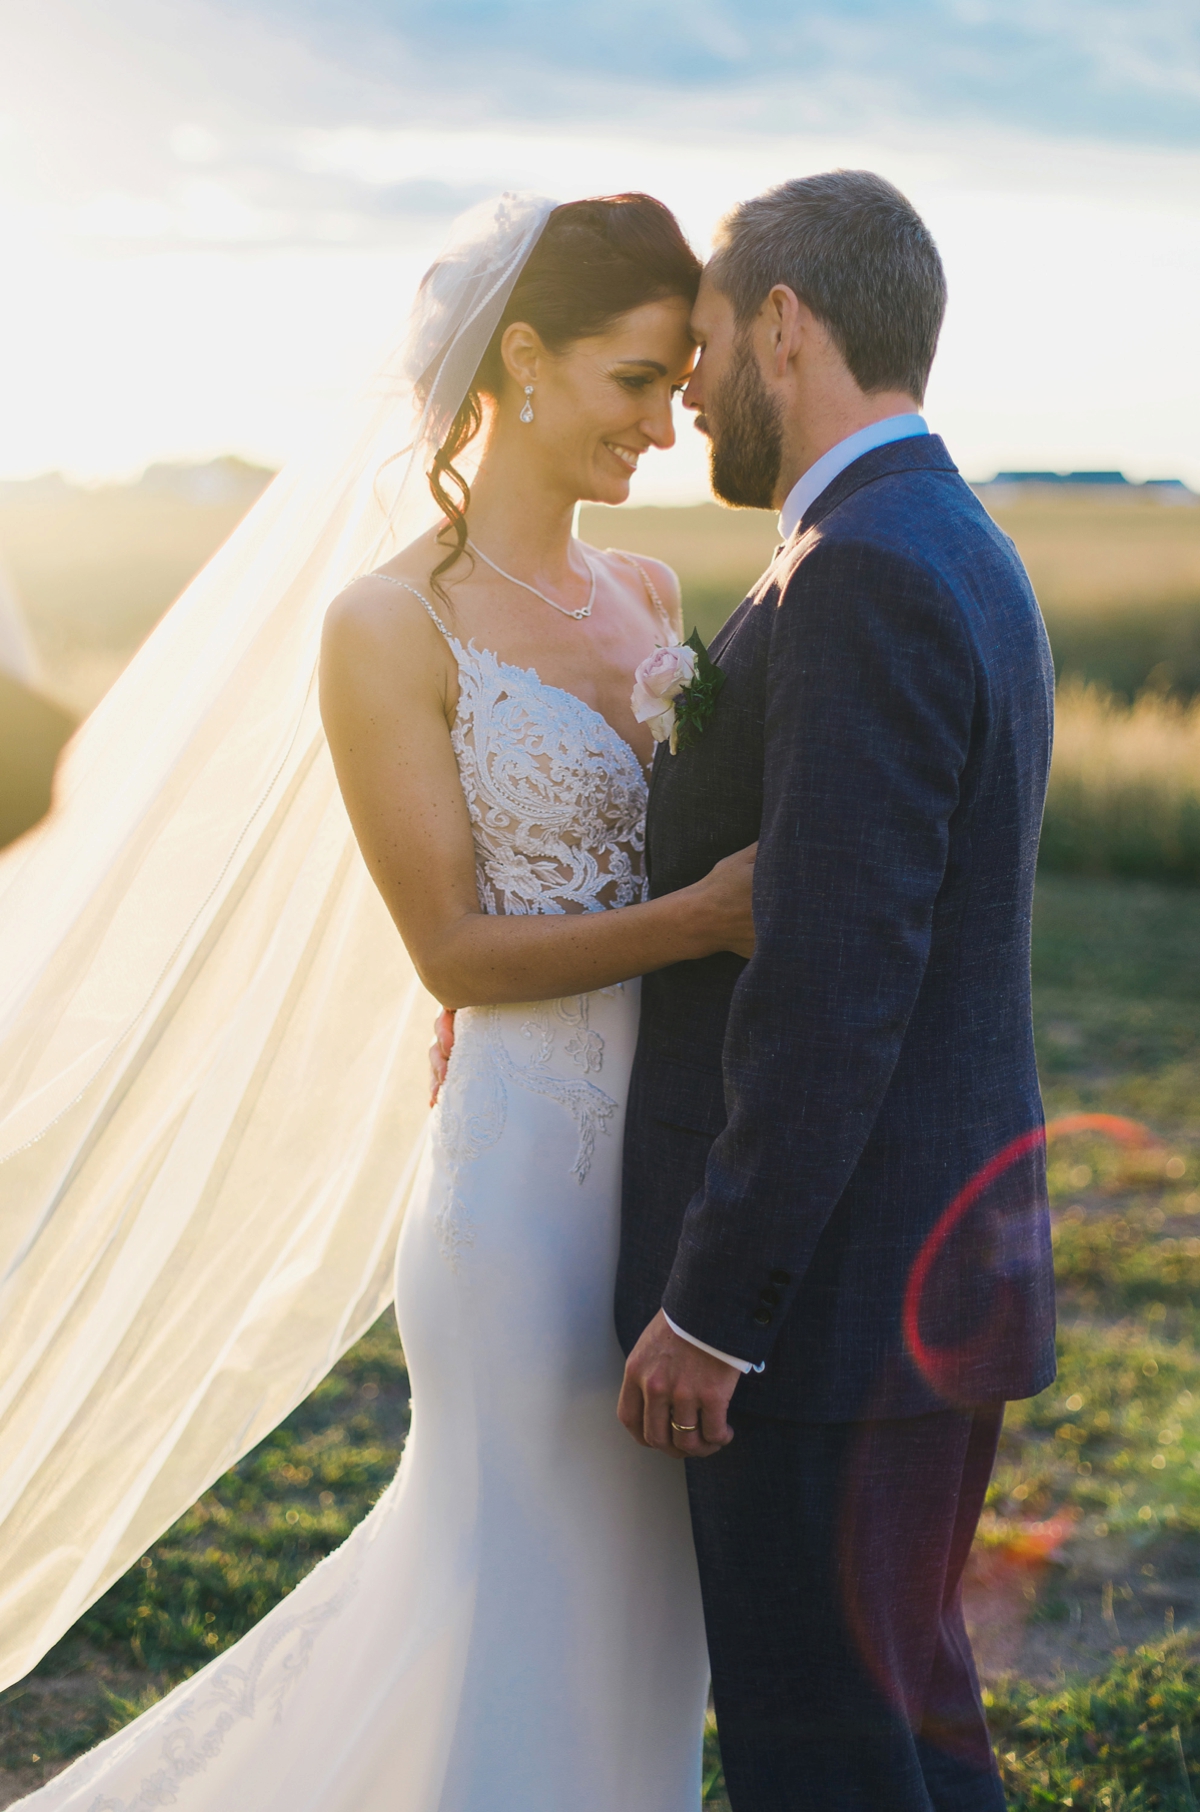 24 Enzoani lace dress romantic outdoor wedding ceremony